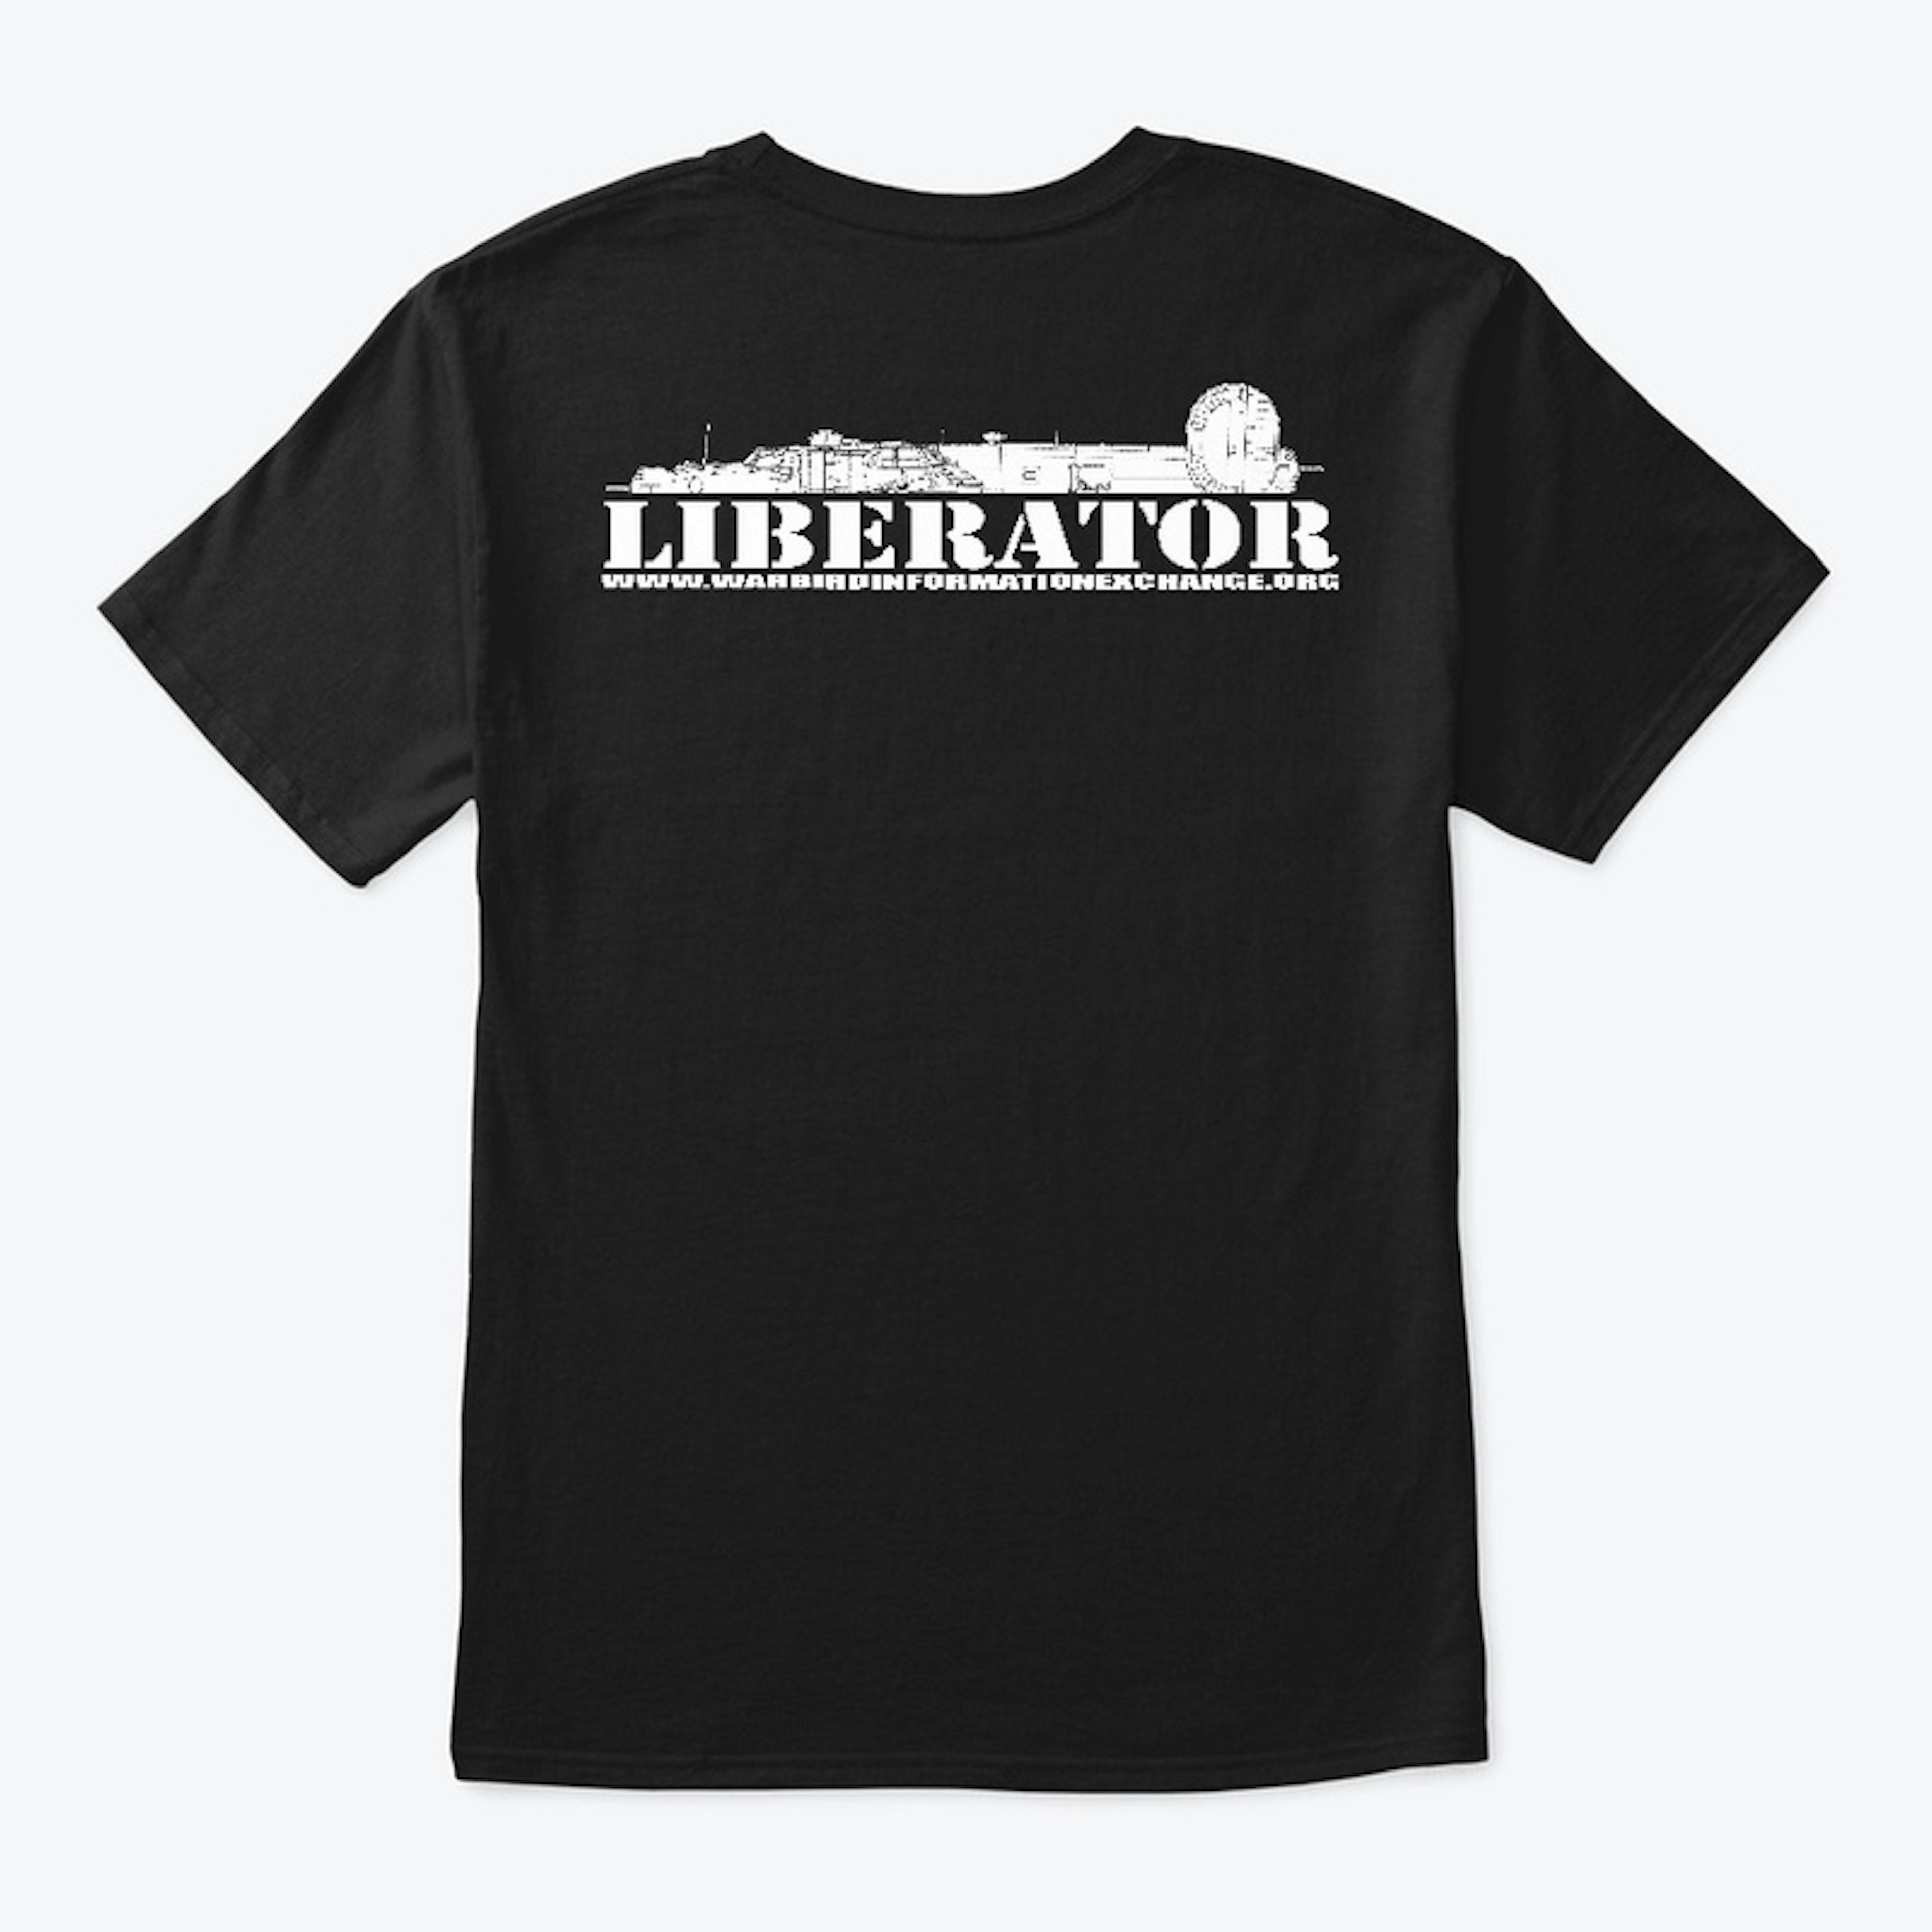 Sm WIX Front logo - Liberator back